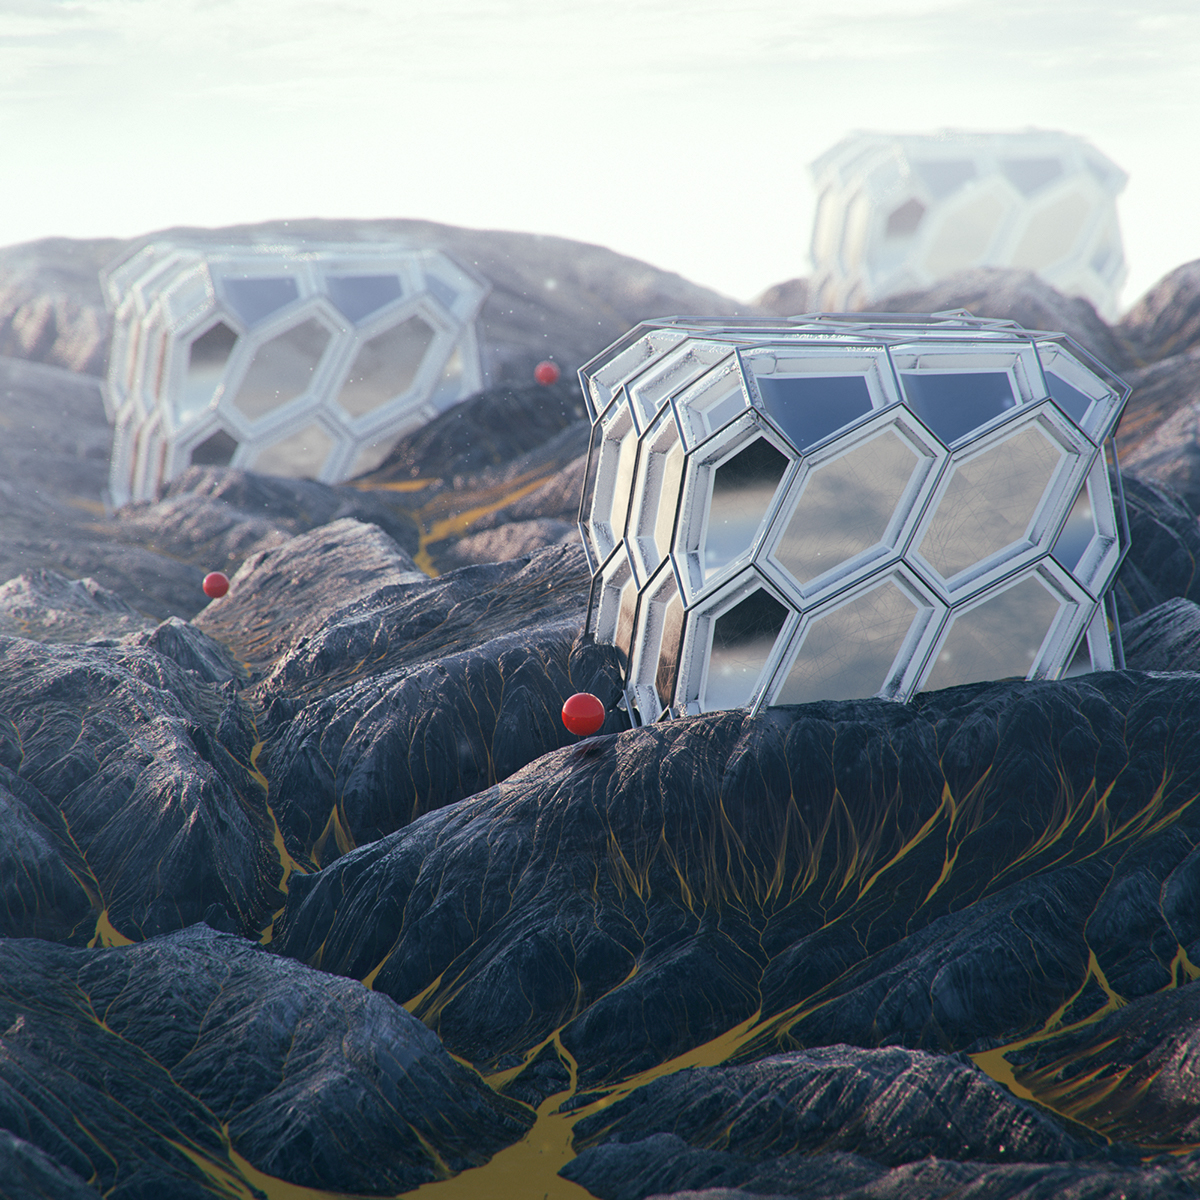 cinema 4d octane Render everyday daily 3D art Scifi fantasy Landscape surreal abstract organic design digital